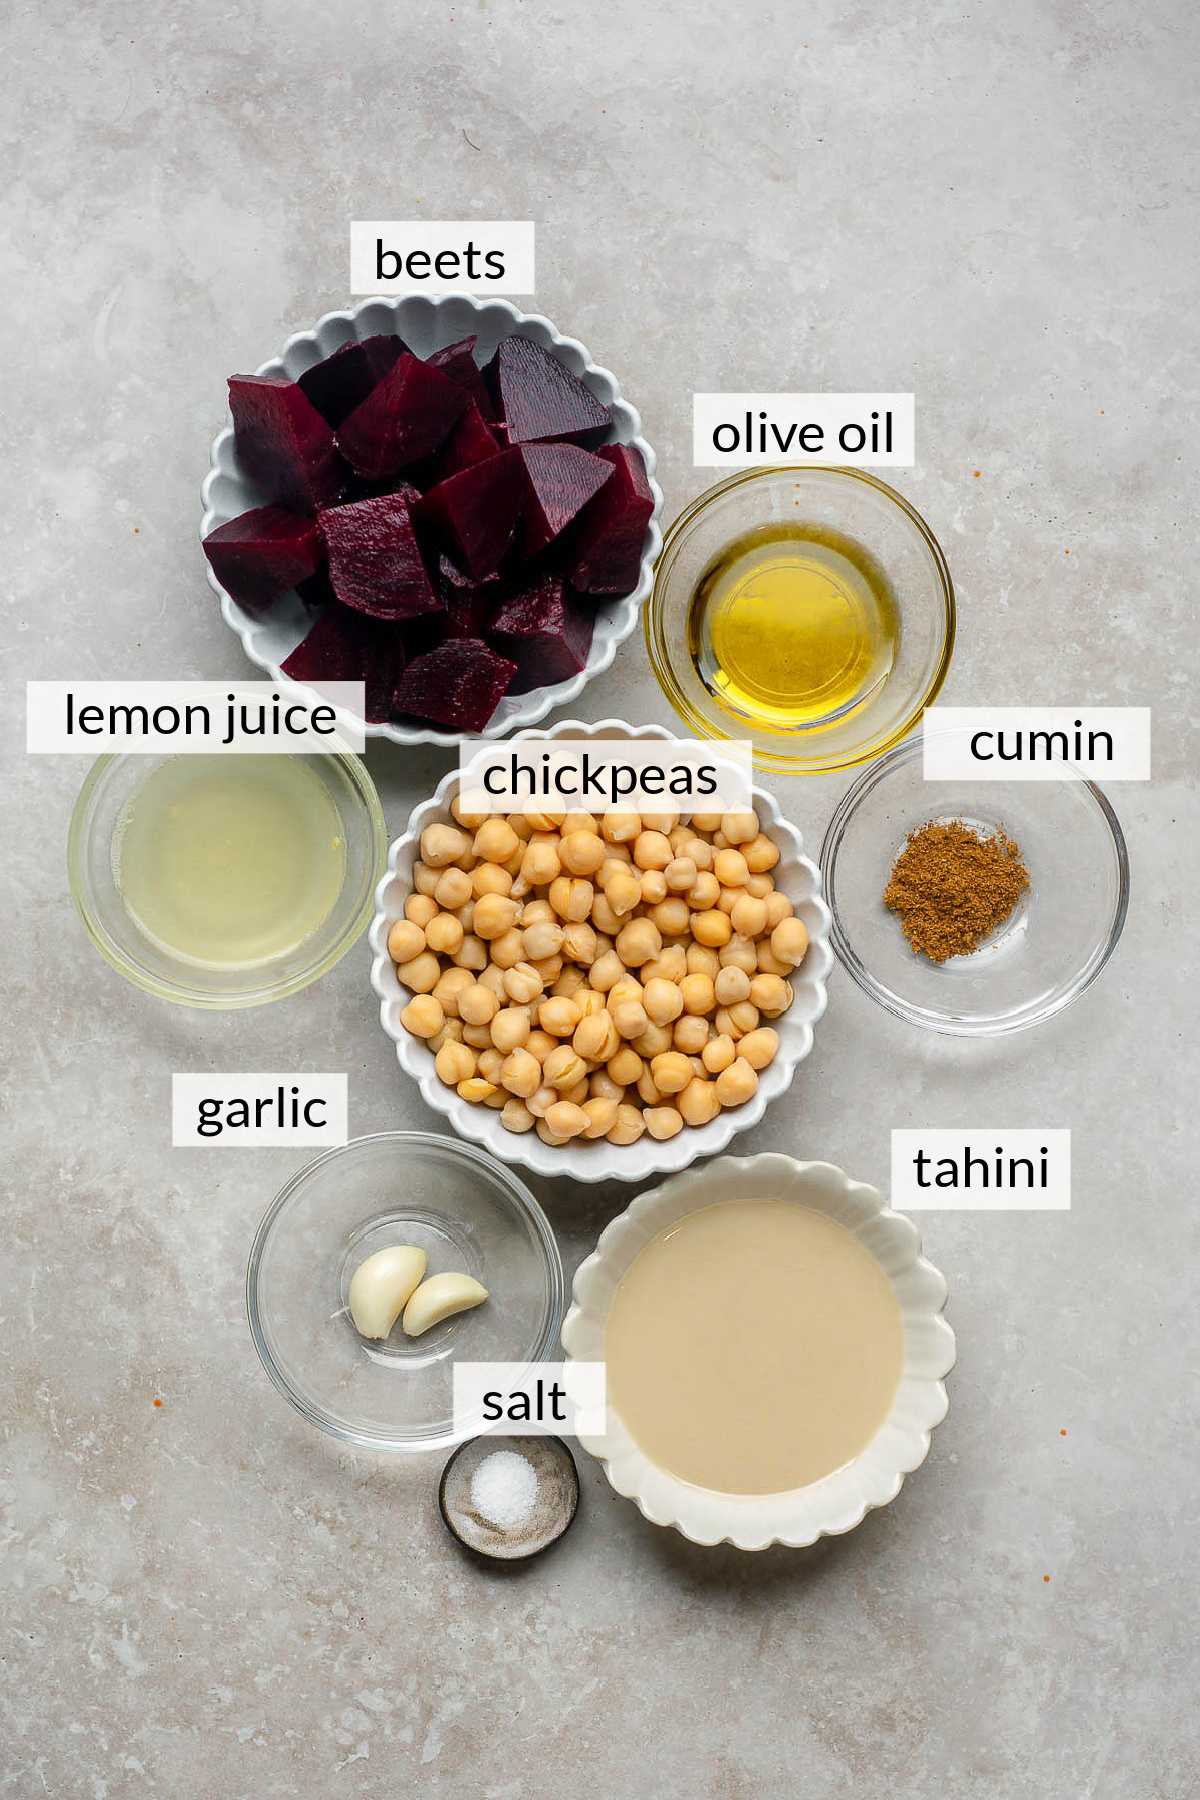 Chopped beets, olive oil, lemon juice, tahini, garlic and cumin in small bowls.